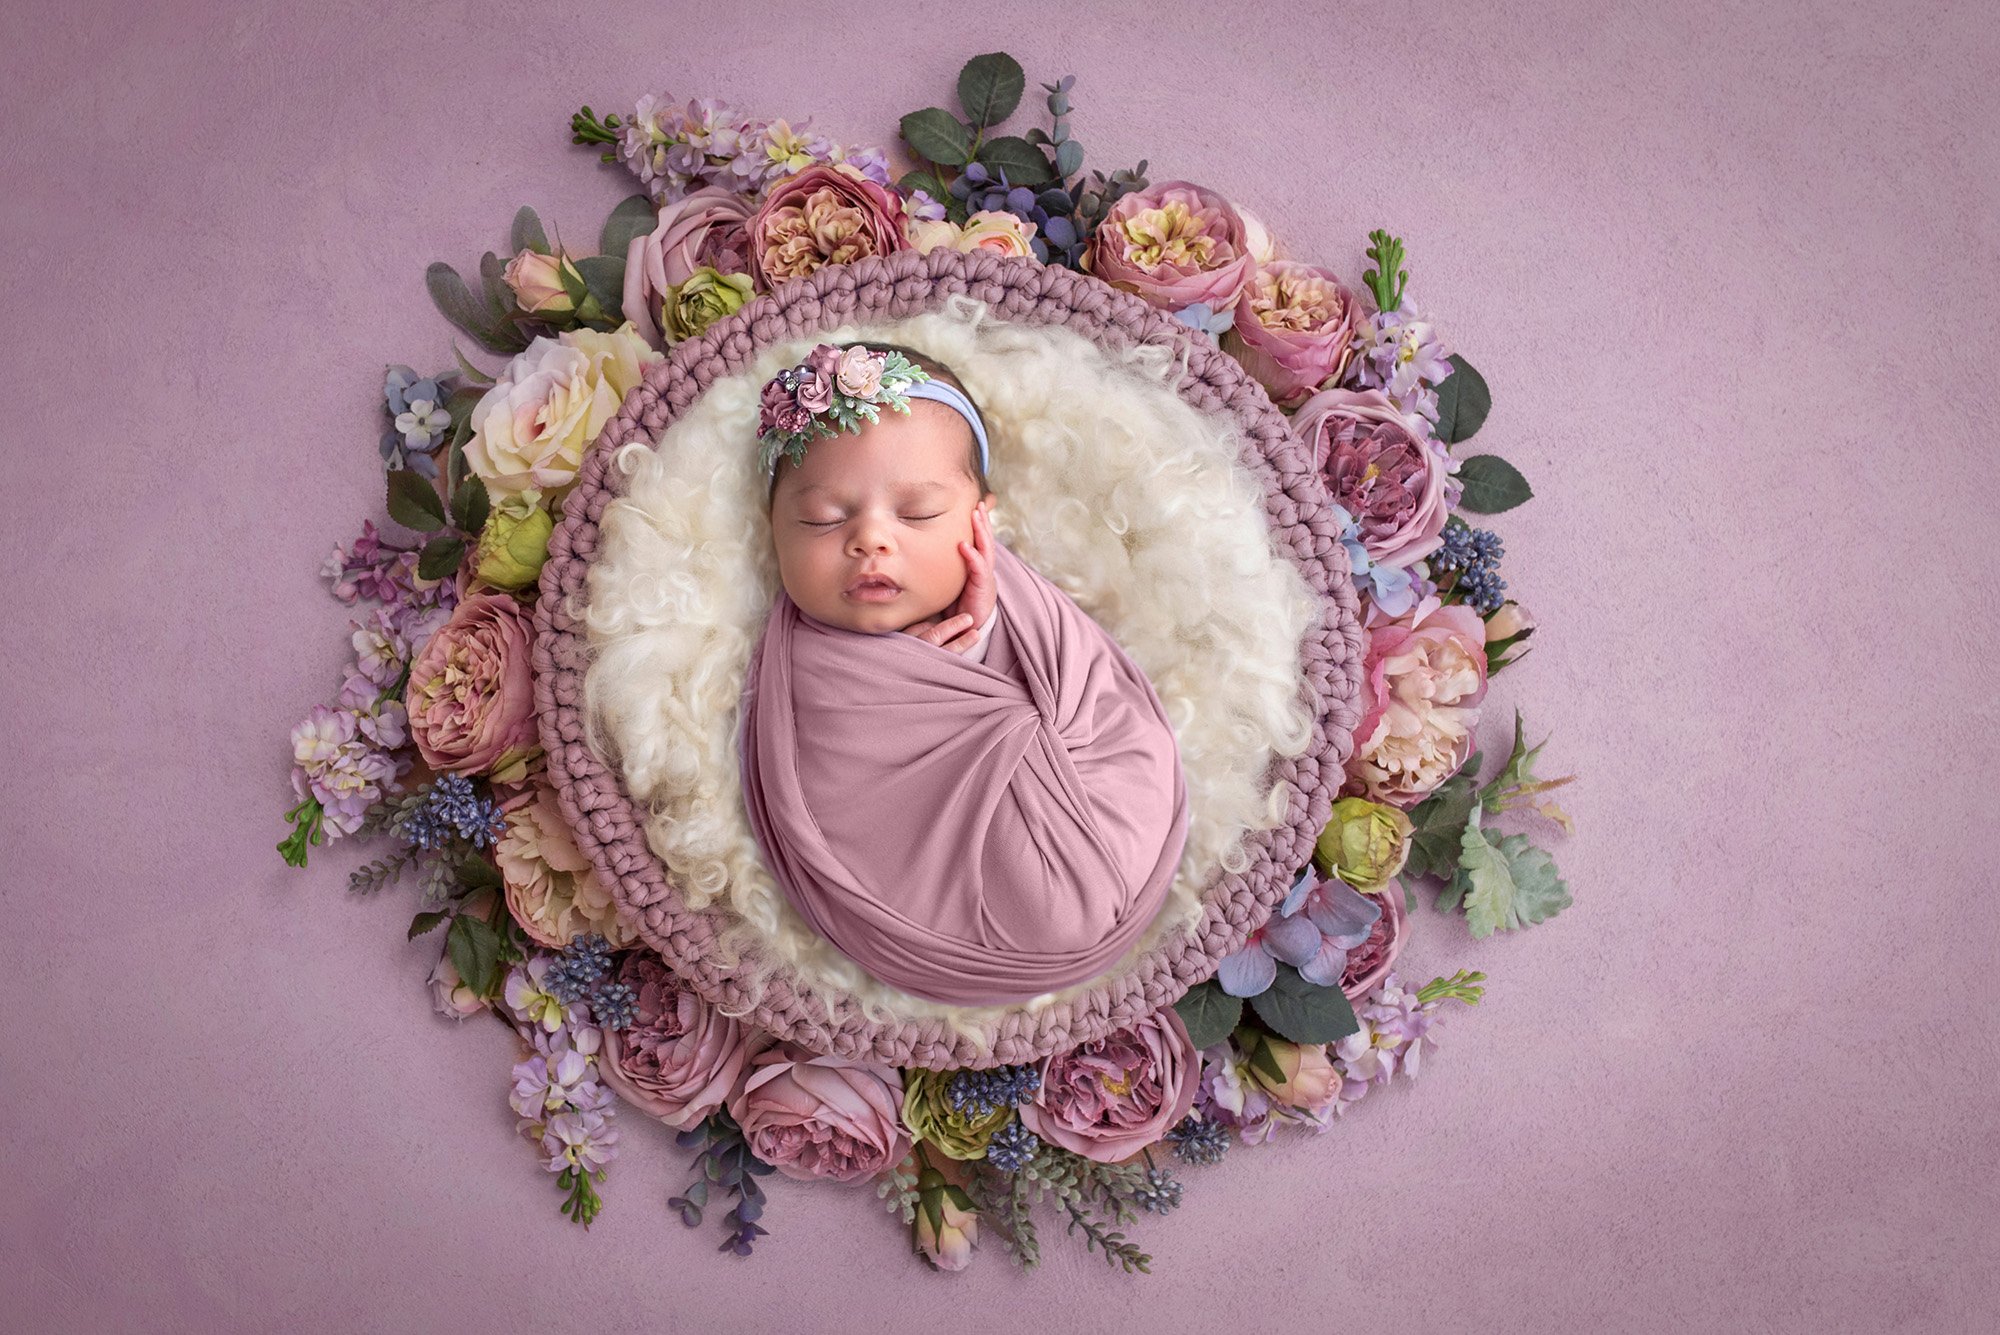 newborn baby girl swaddled in purple laying on white fuzzy blanket inside a wreath of flowers on purple backdrop